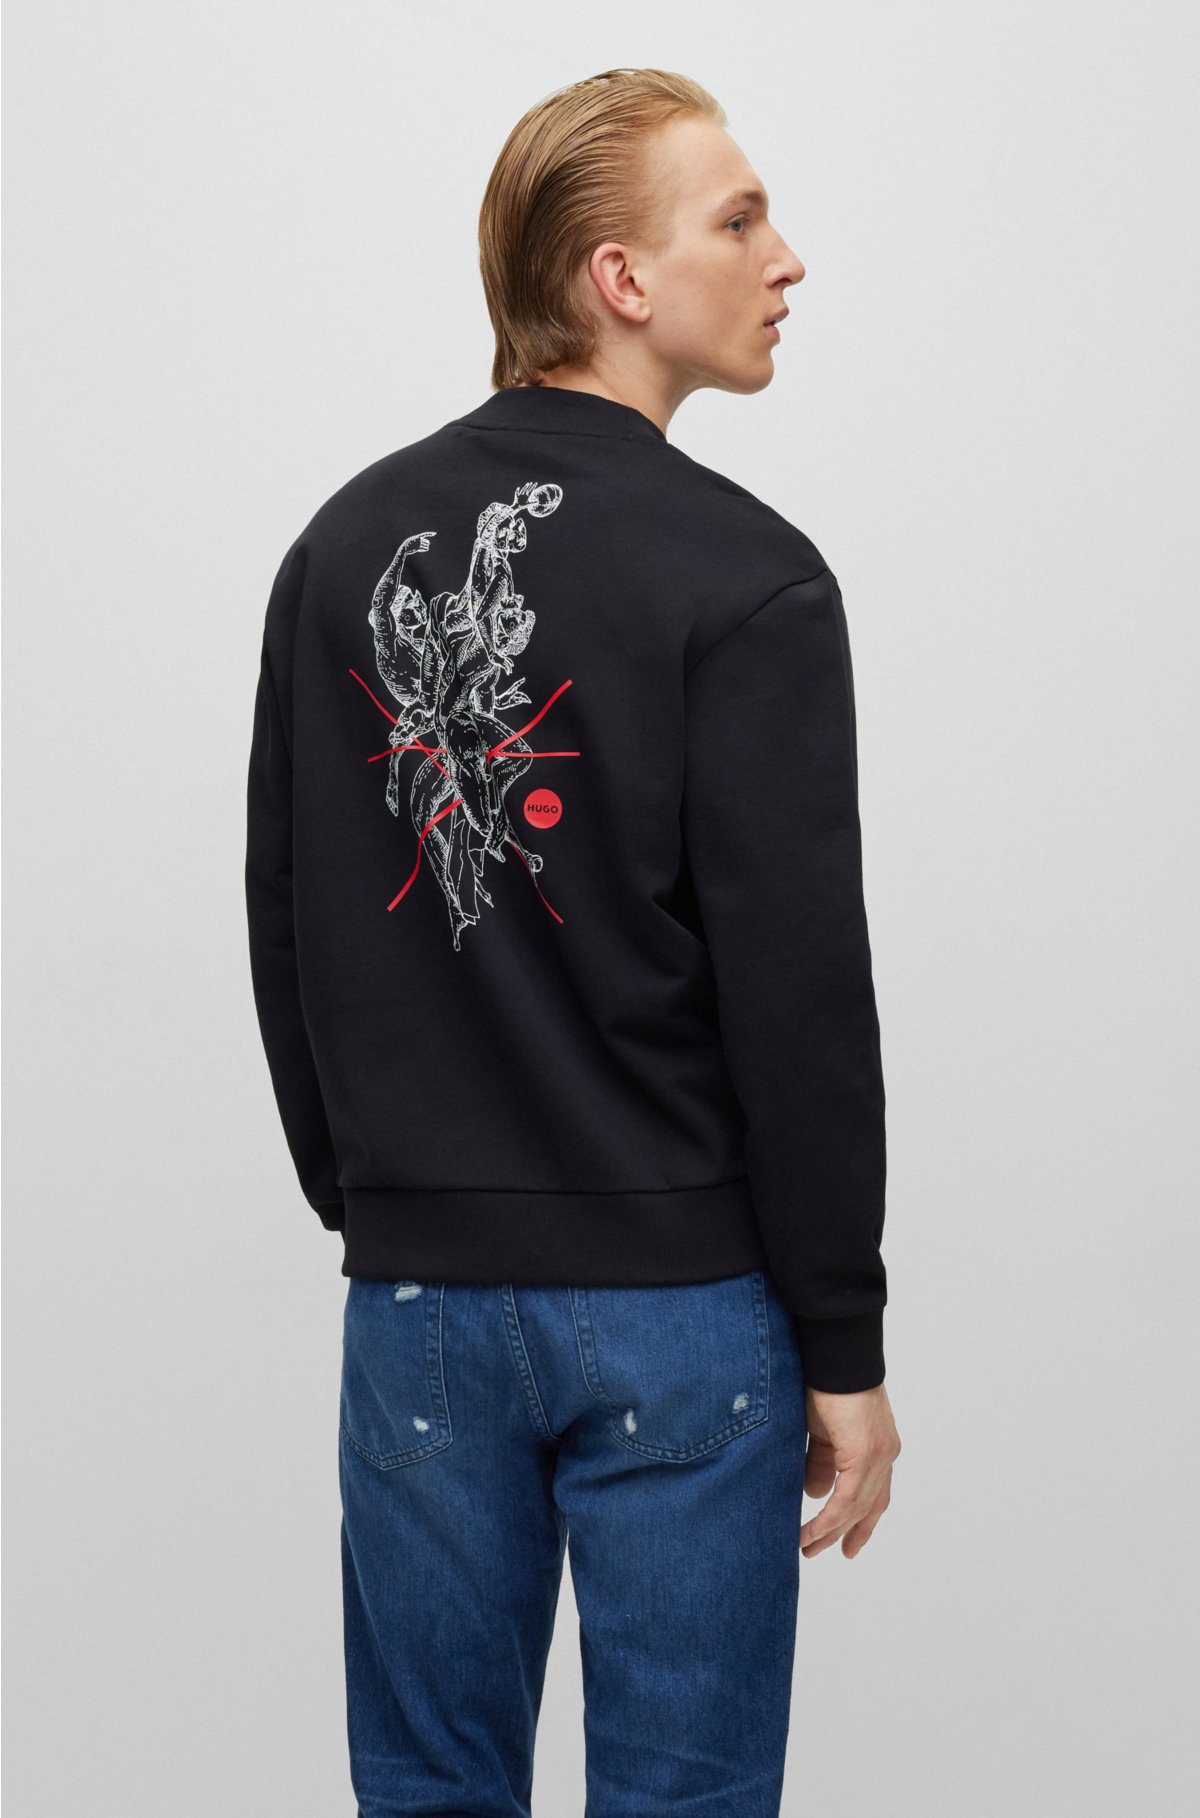 HUGO - French-terry sweatshirt with tattoo-inspired artwork